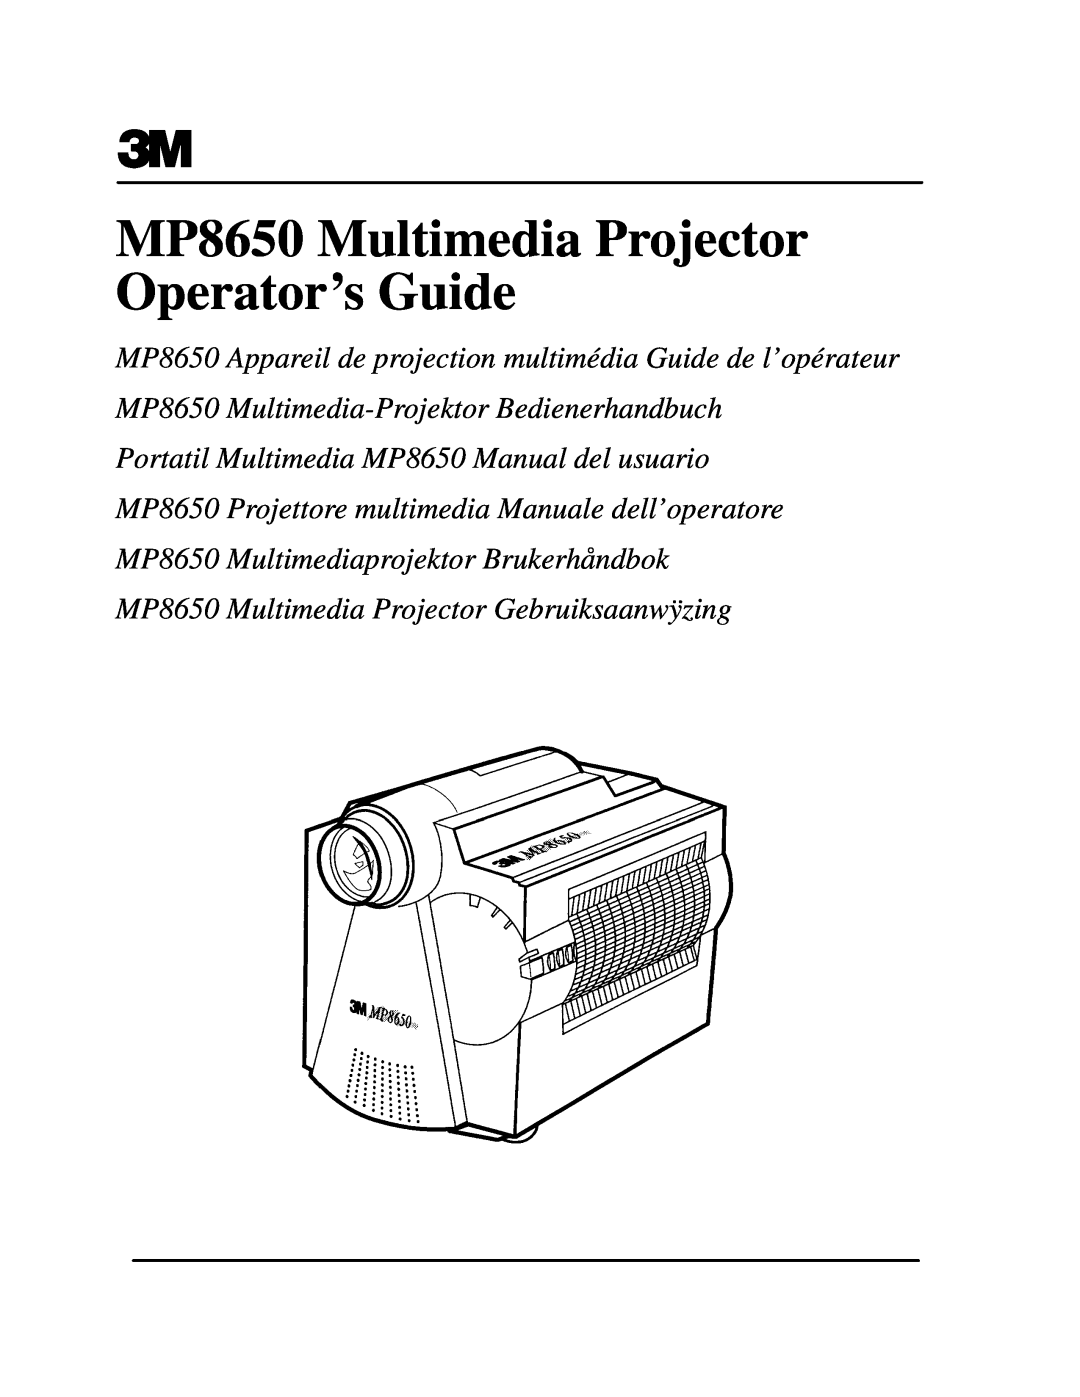 3M manual MP8650 Multimedia Projector Operators Guide 